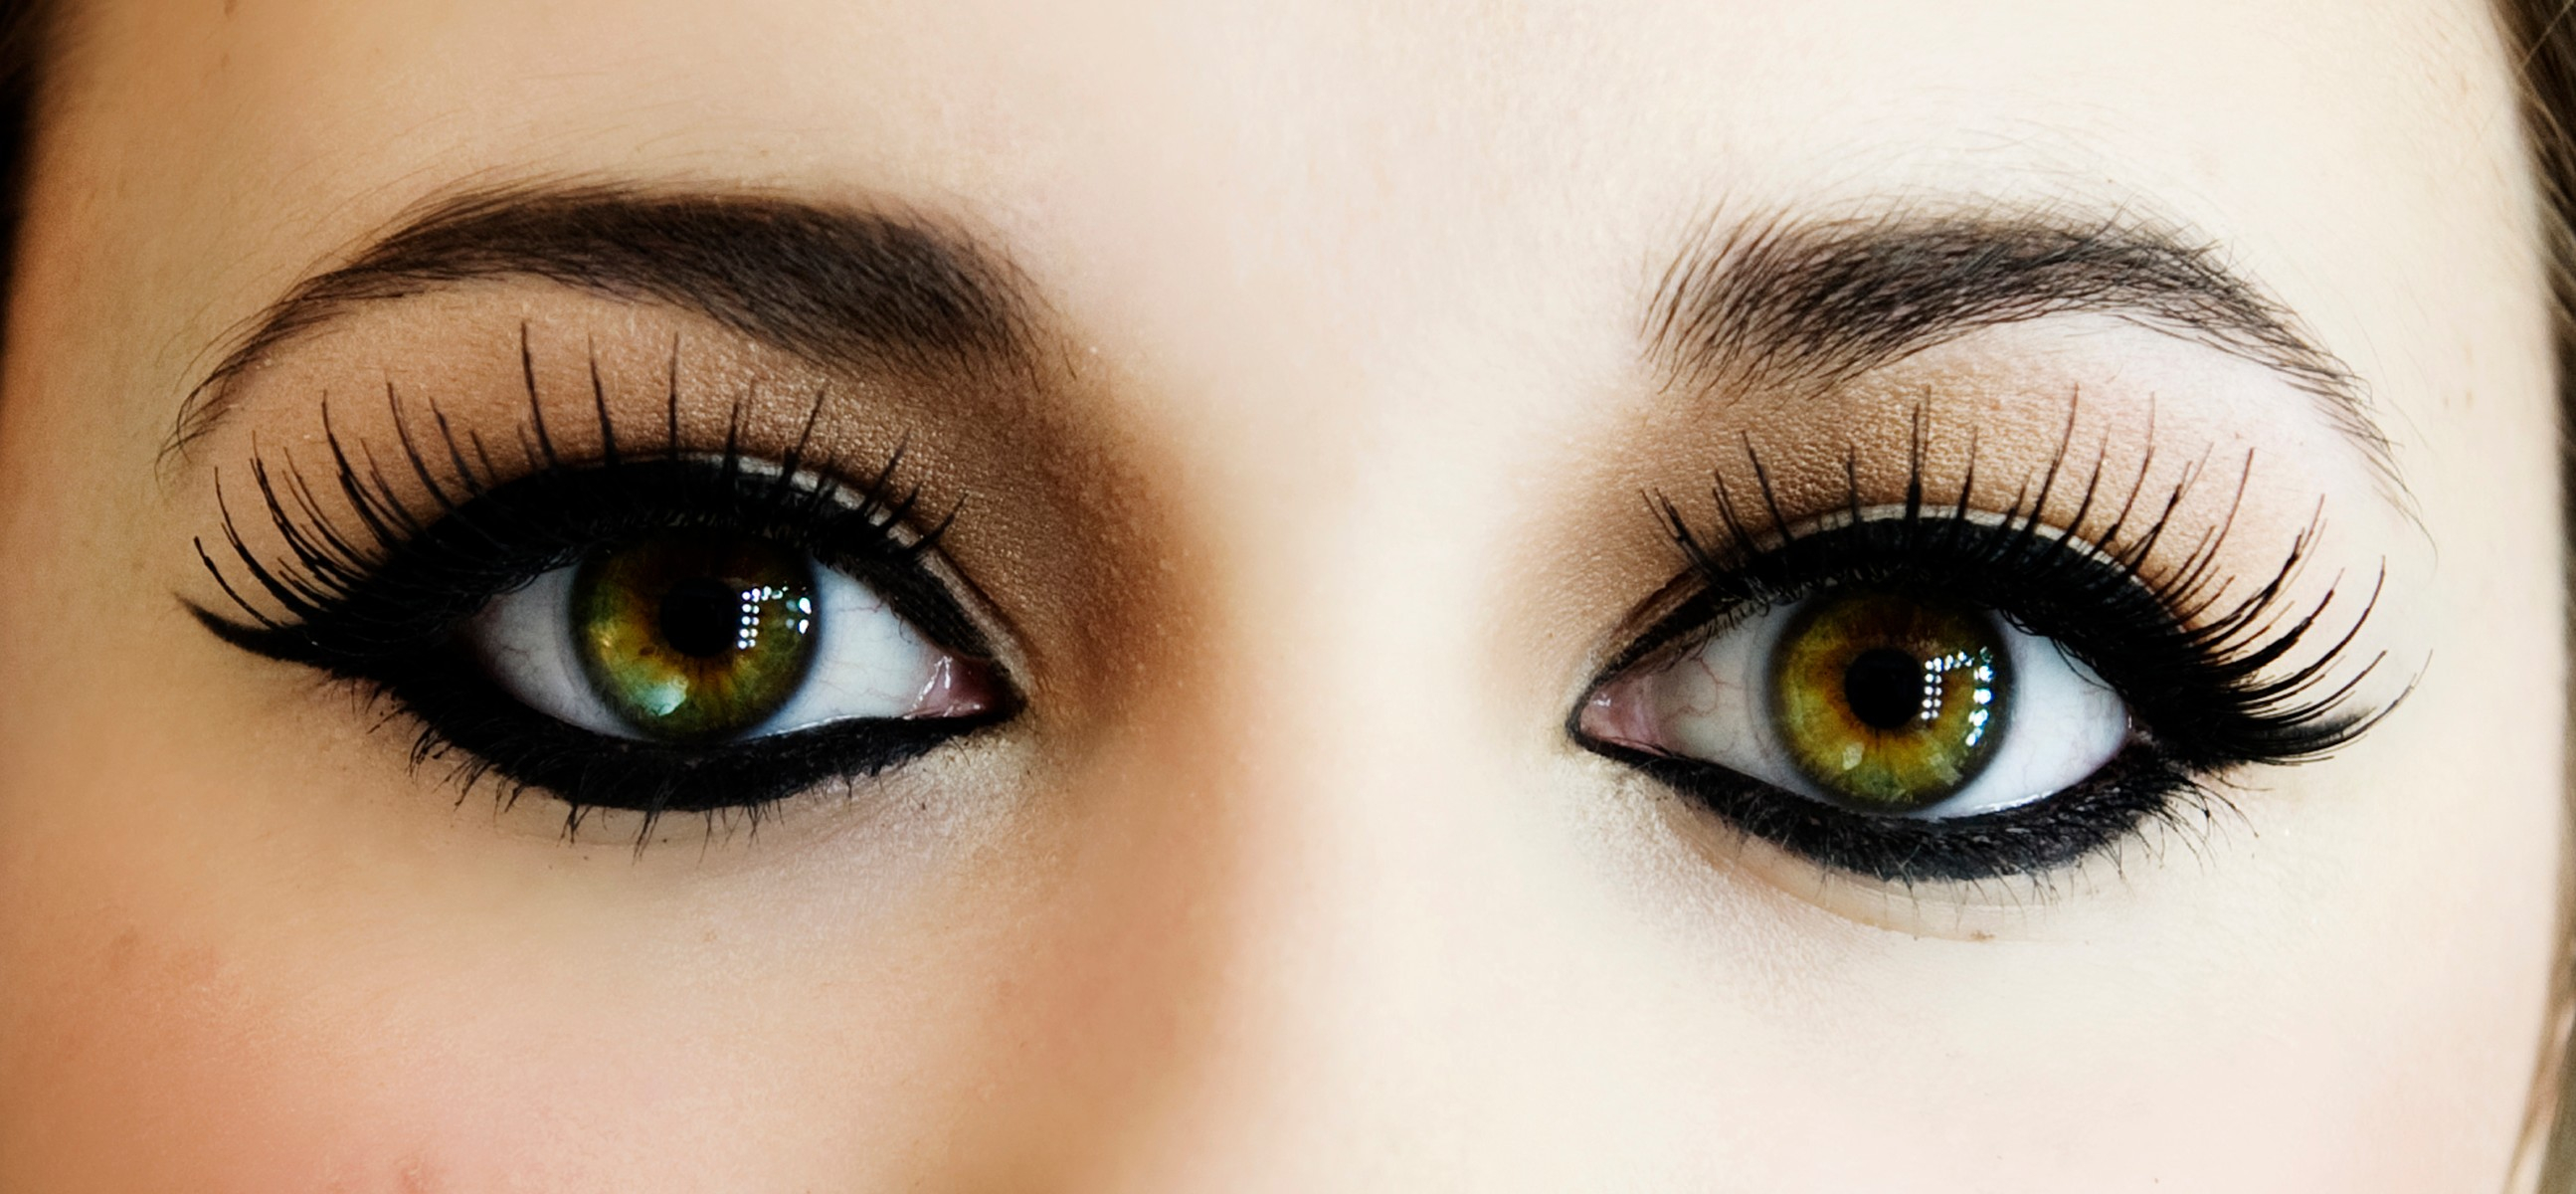 Indian Eye Makeup Most Efficient Way To Hide Dark Circles Red Lipstick Hack Indian